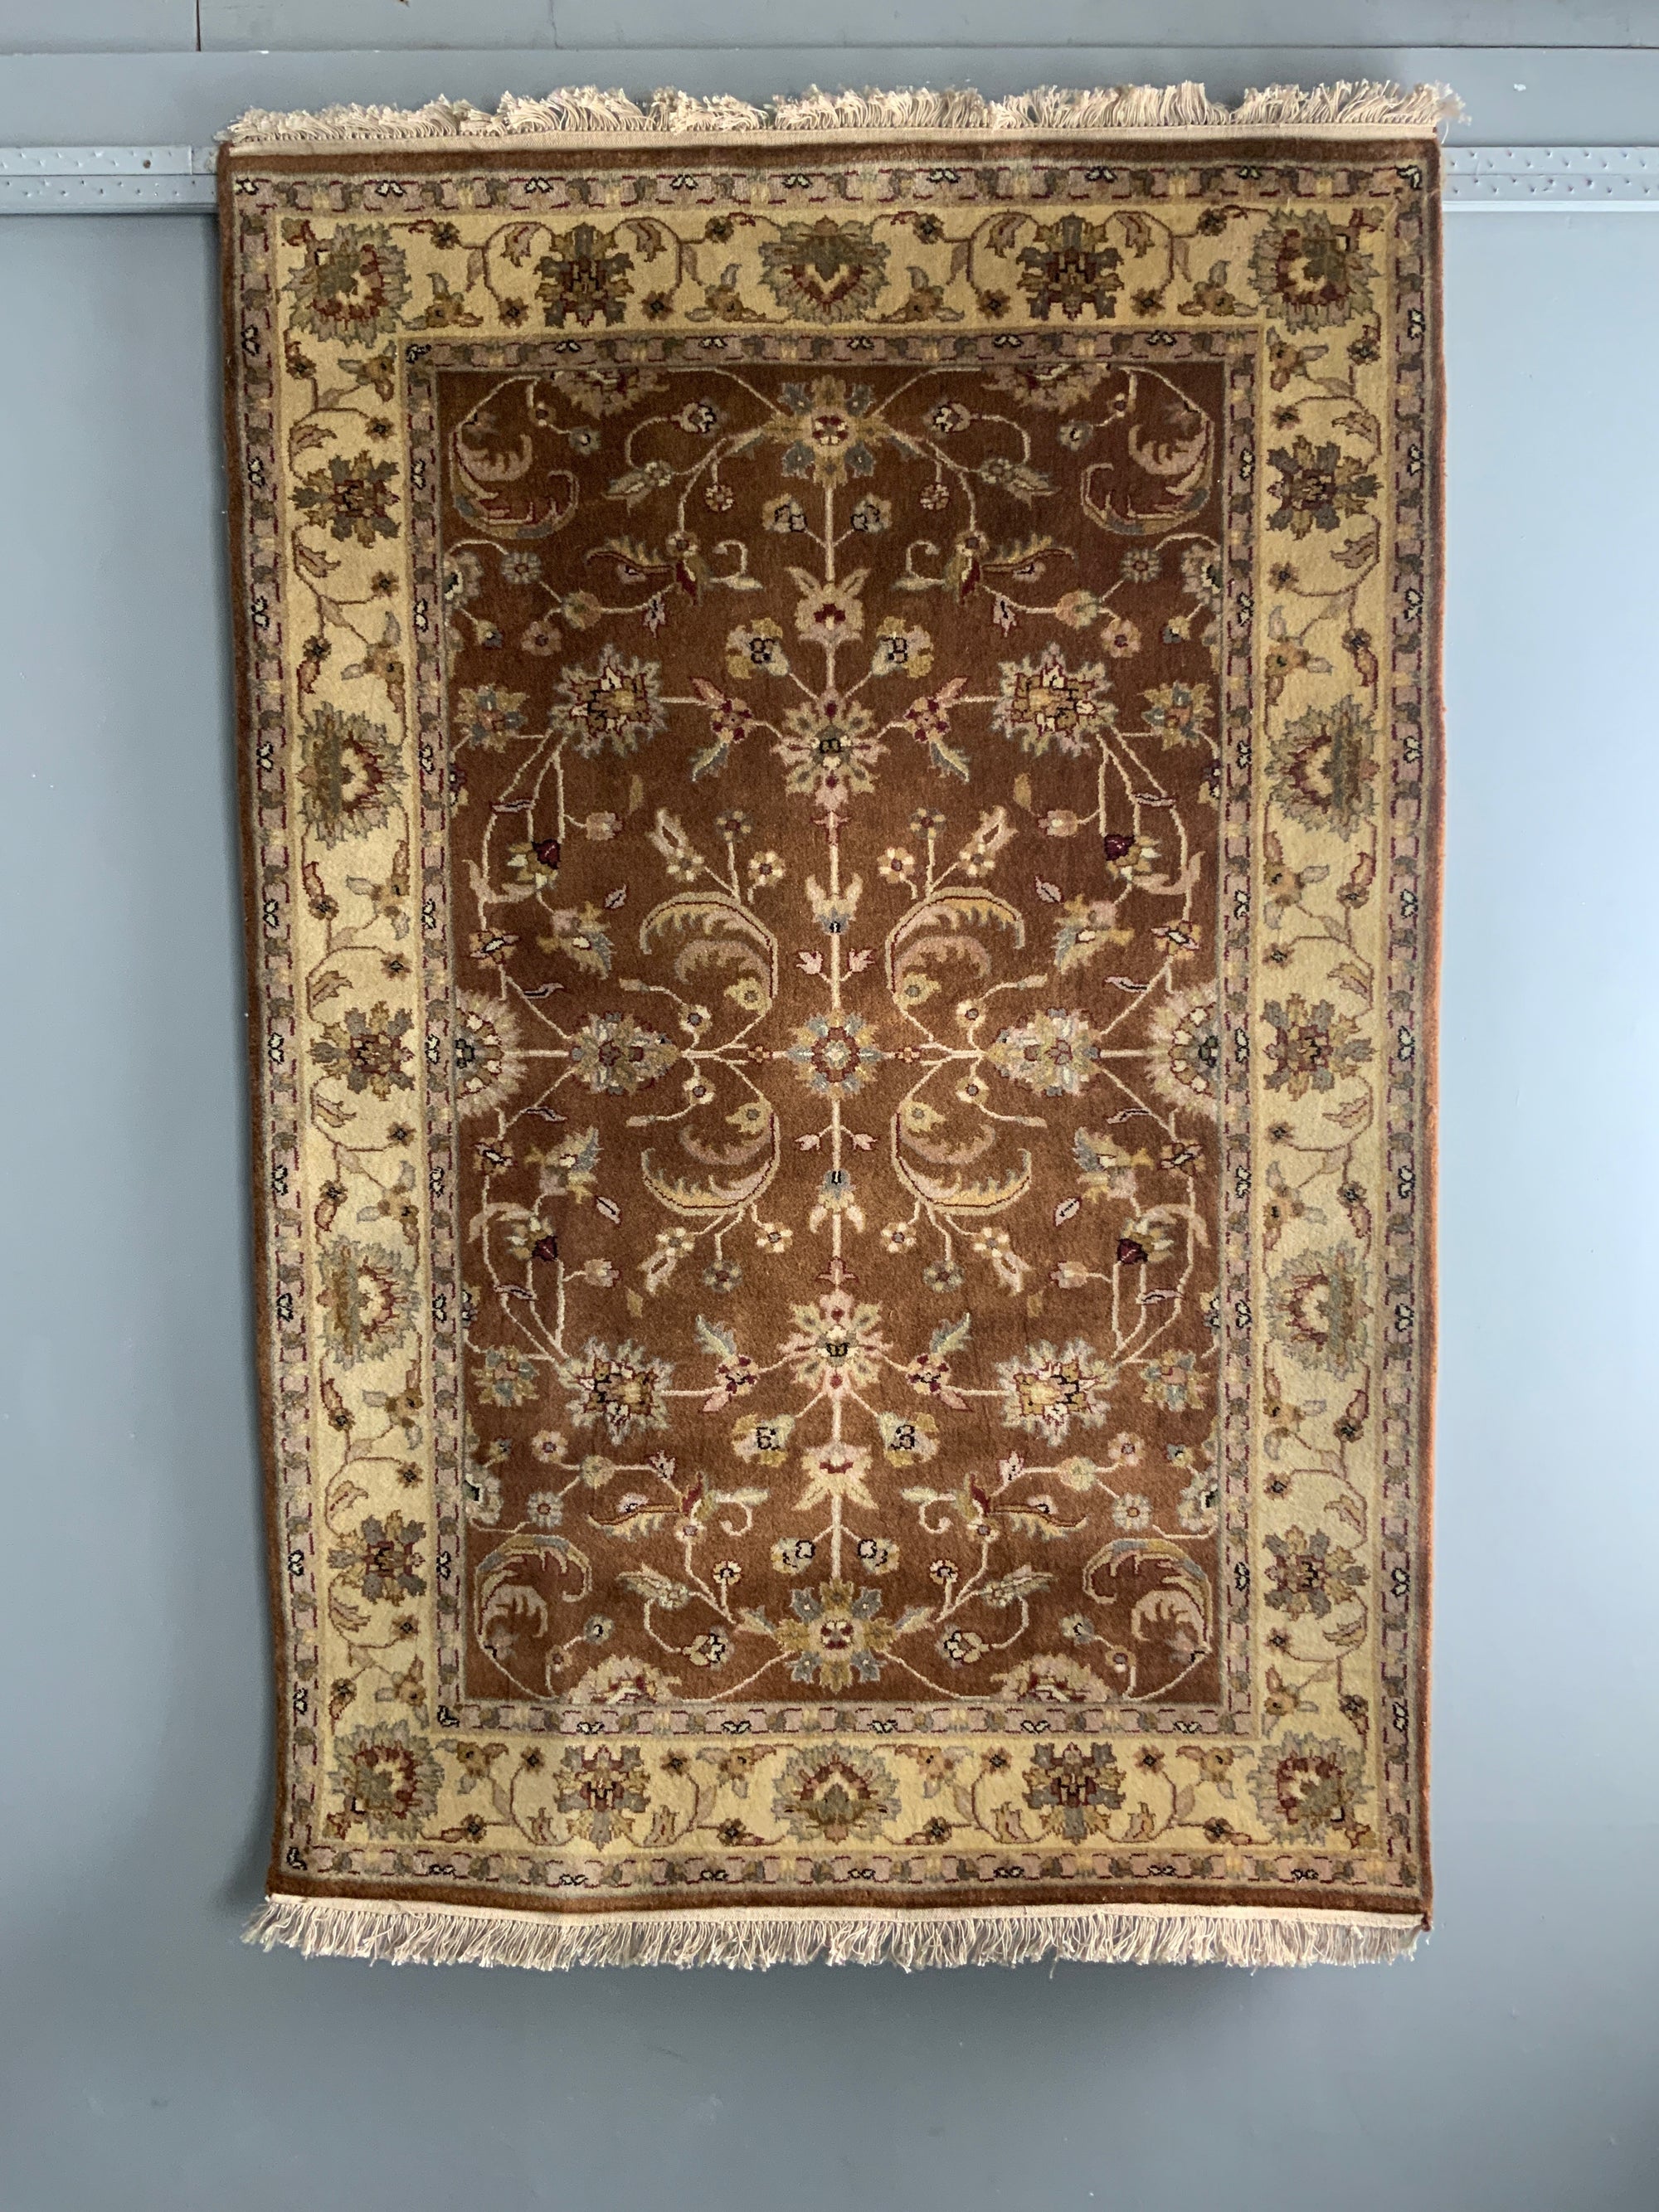 Indo-Persian rug (181 x 125cm)